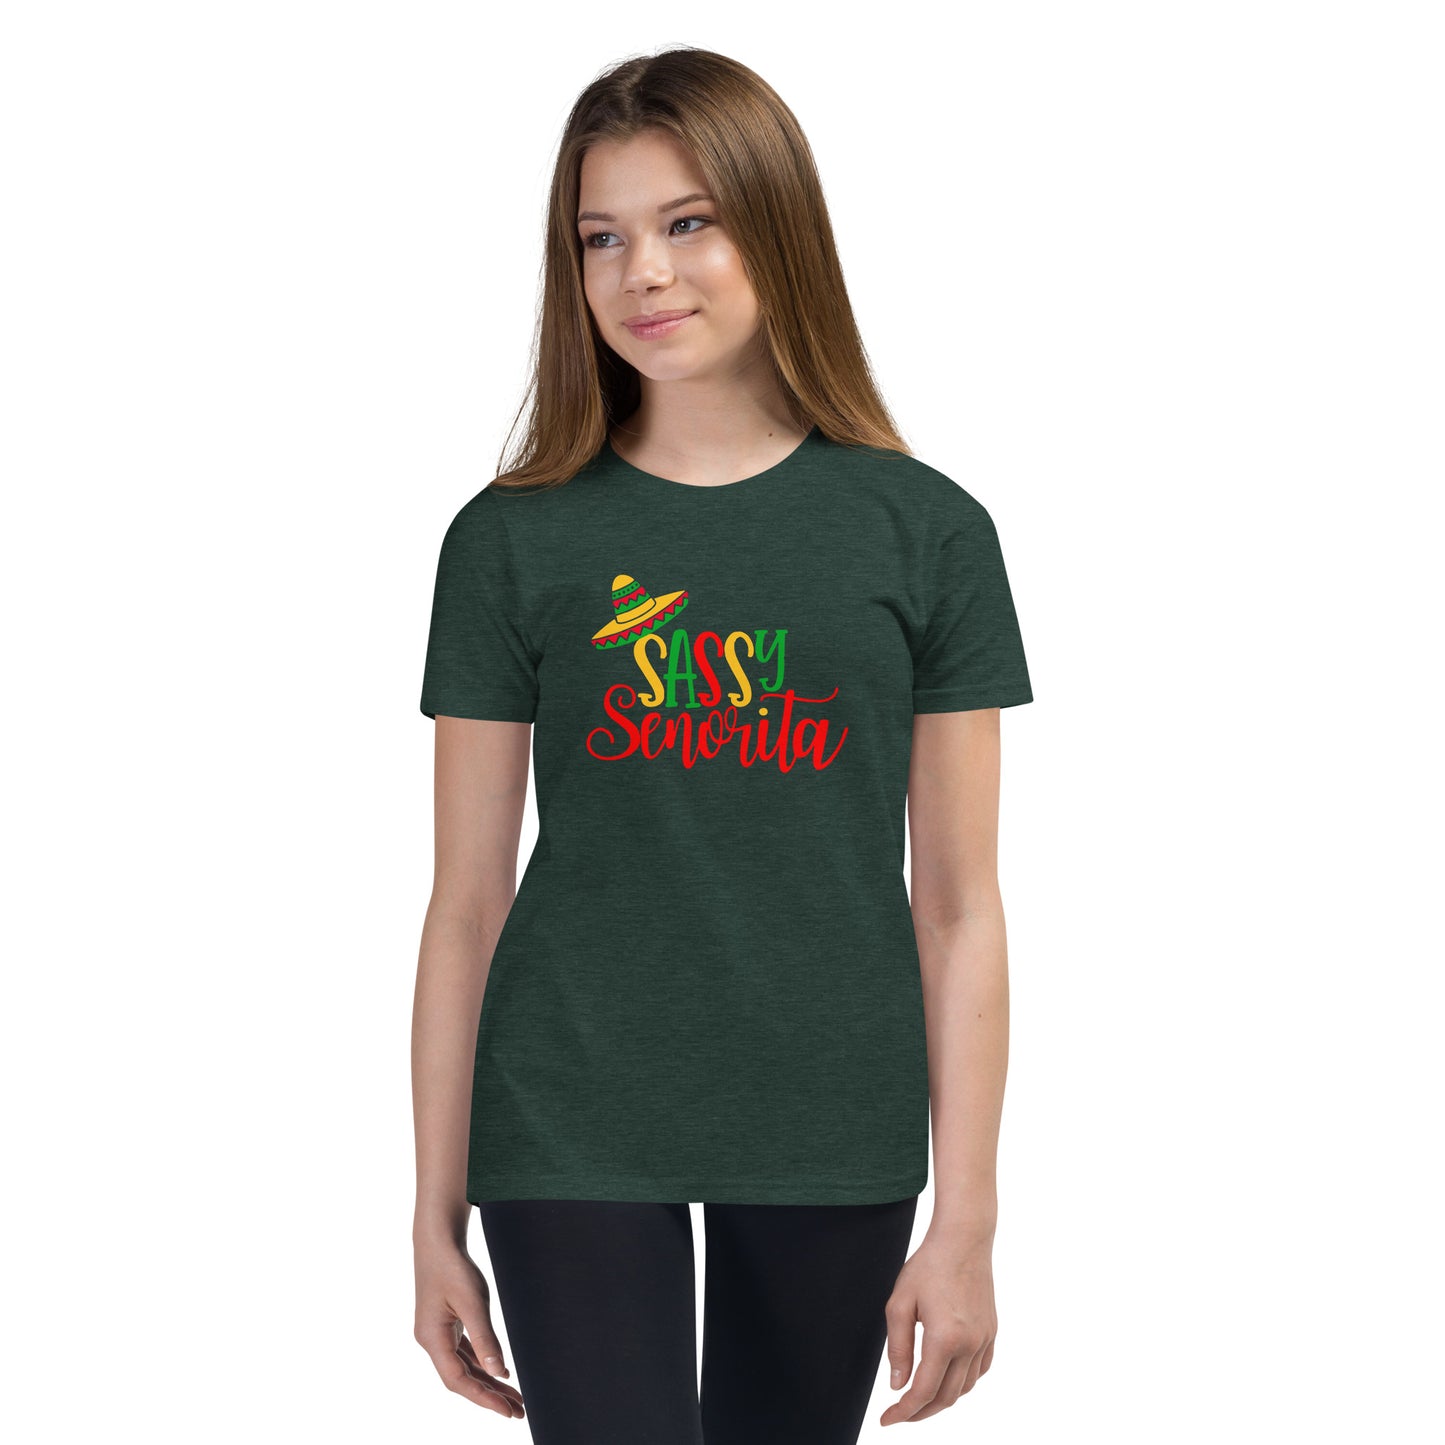 Sassy Senorita Youth T-Shirt